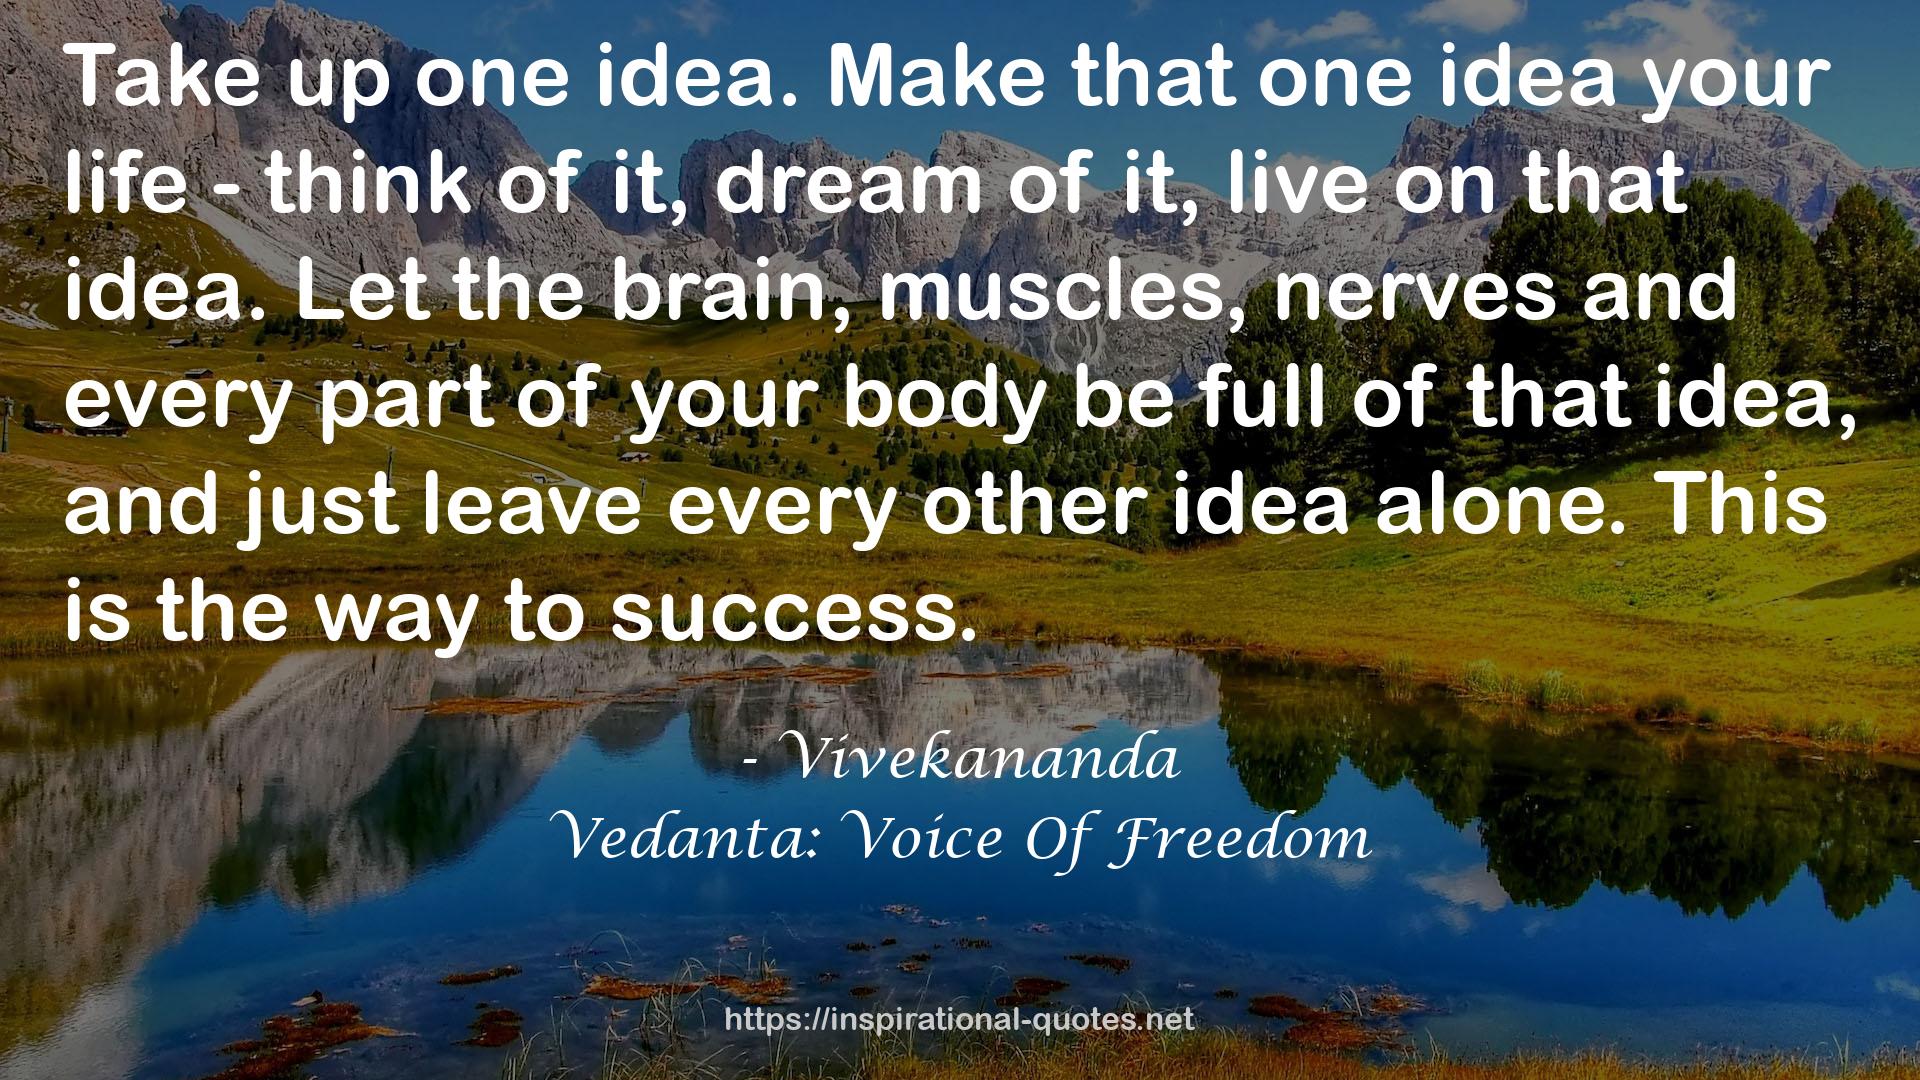 Vedanta: Voice Of Freedom QUOTES